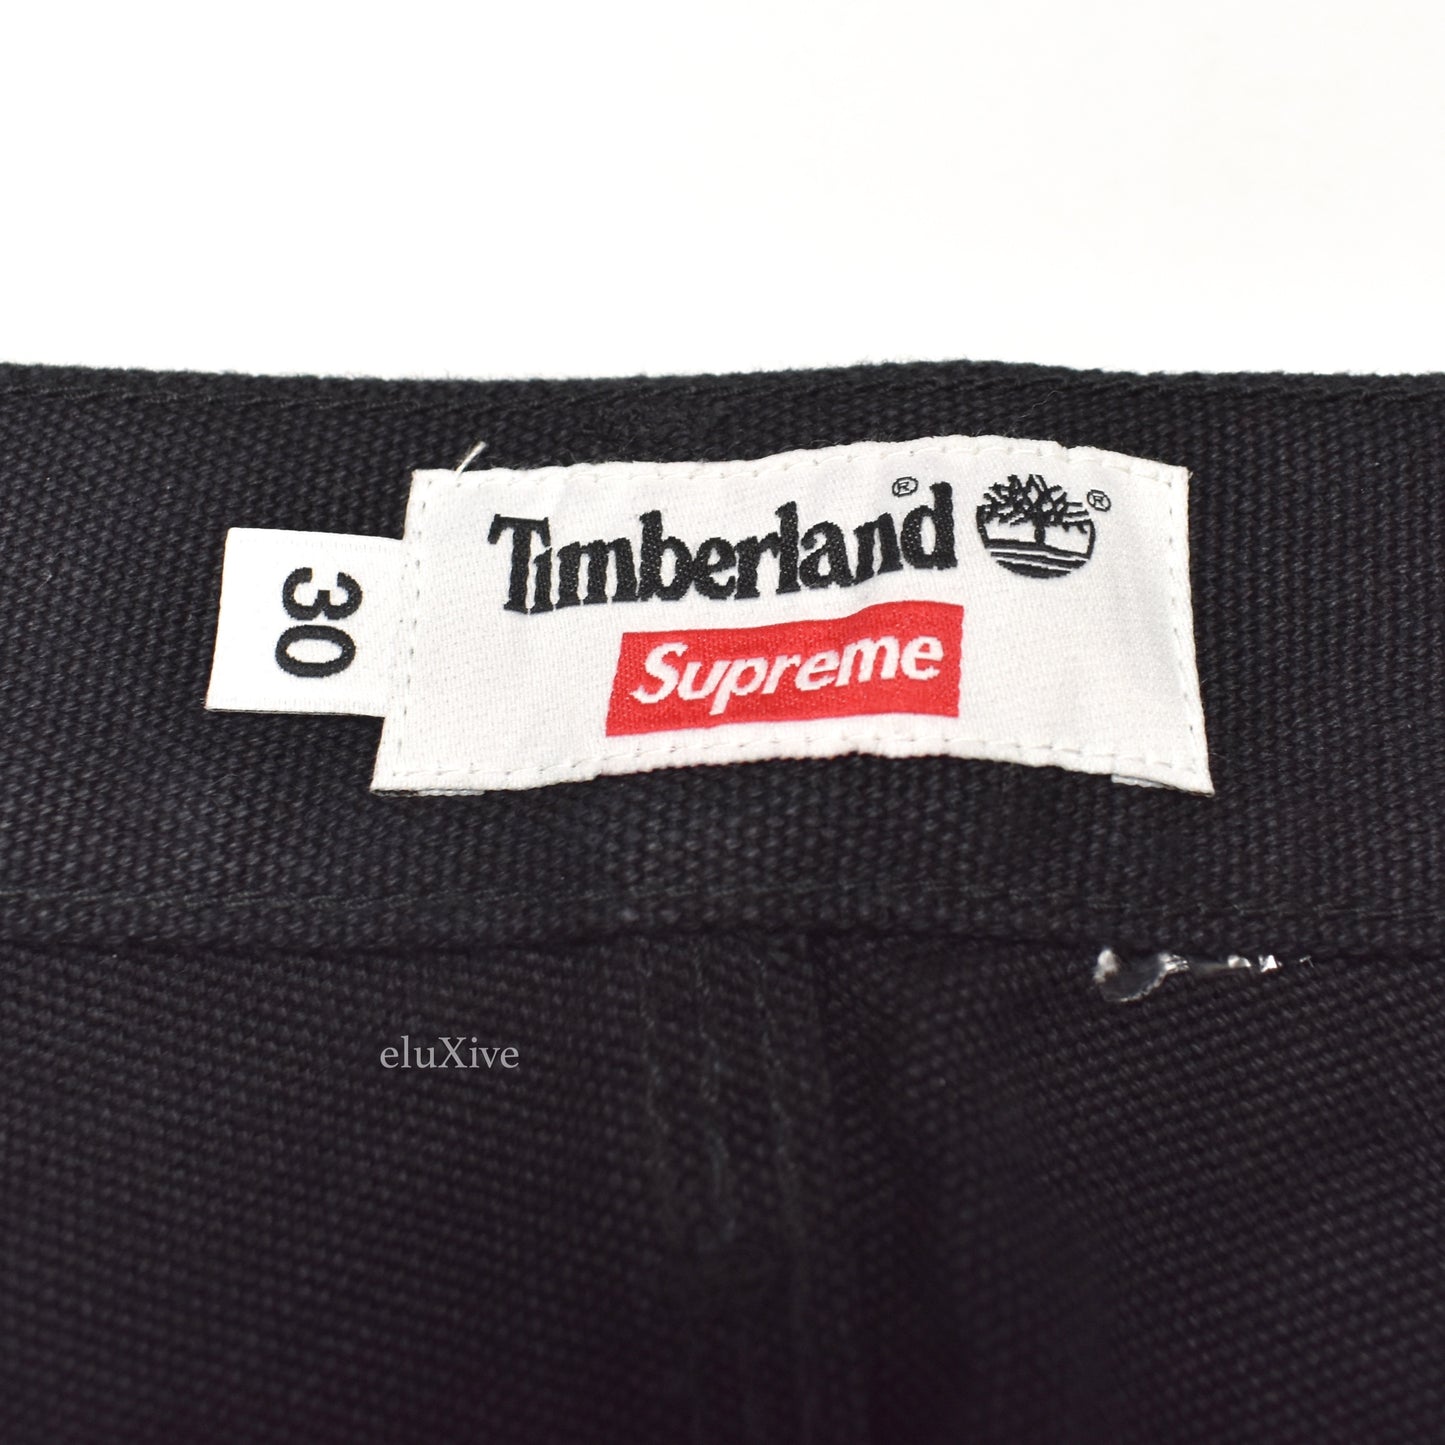 Supreme x Timberland - Double Knee Painter Pants (Black)